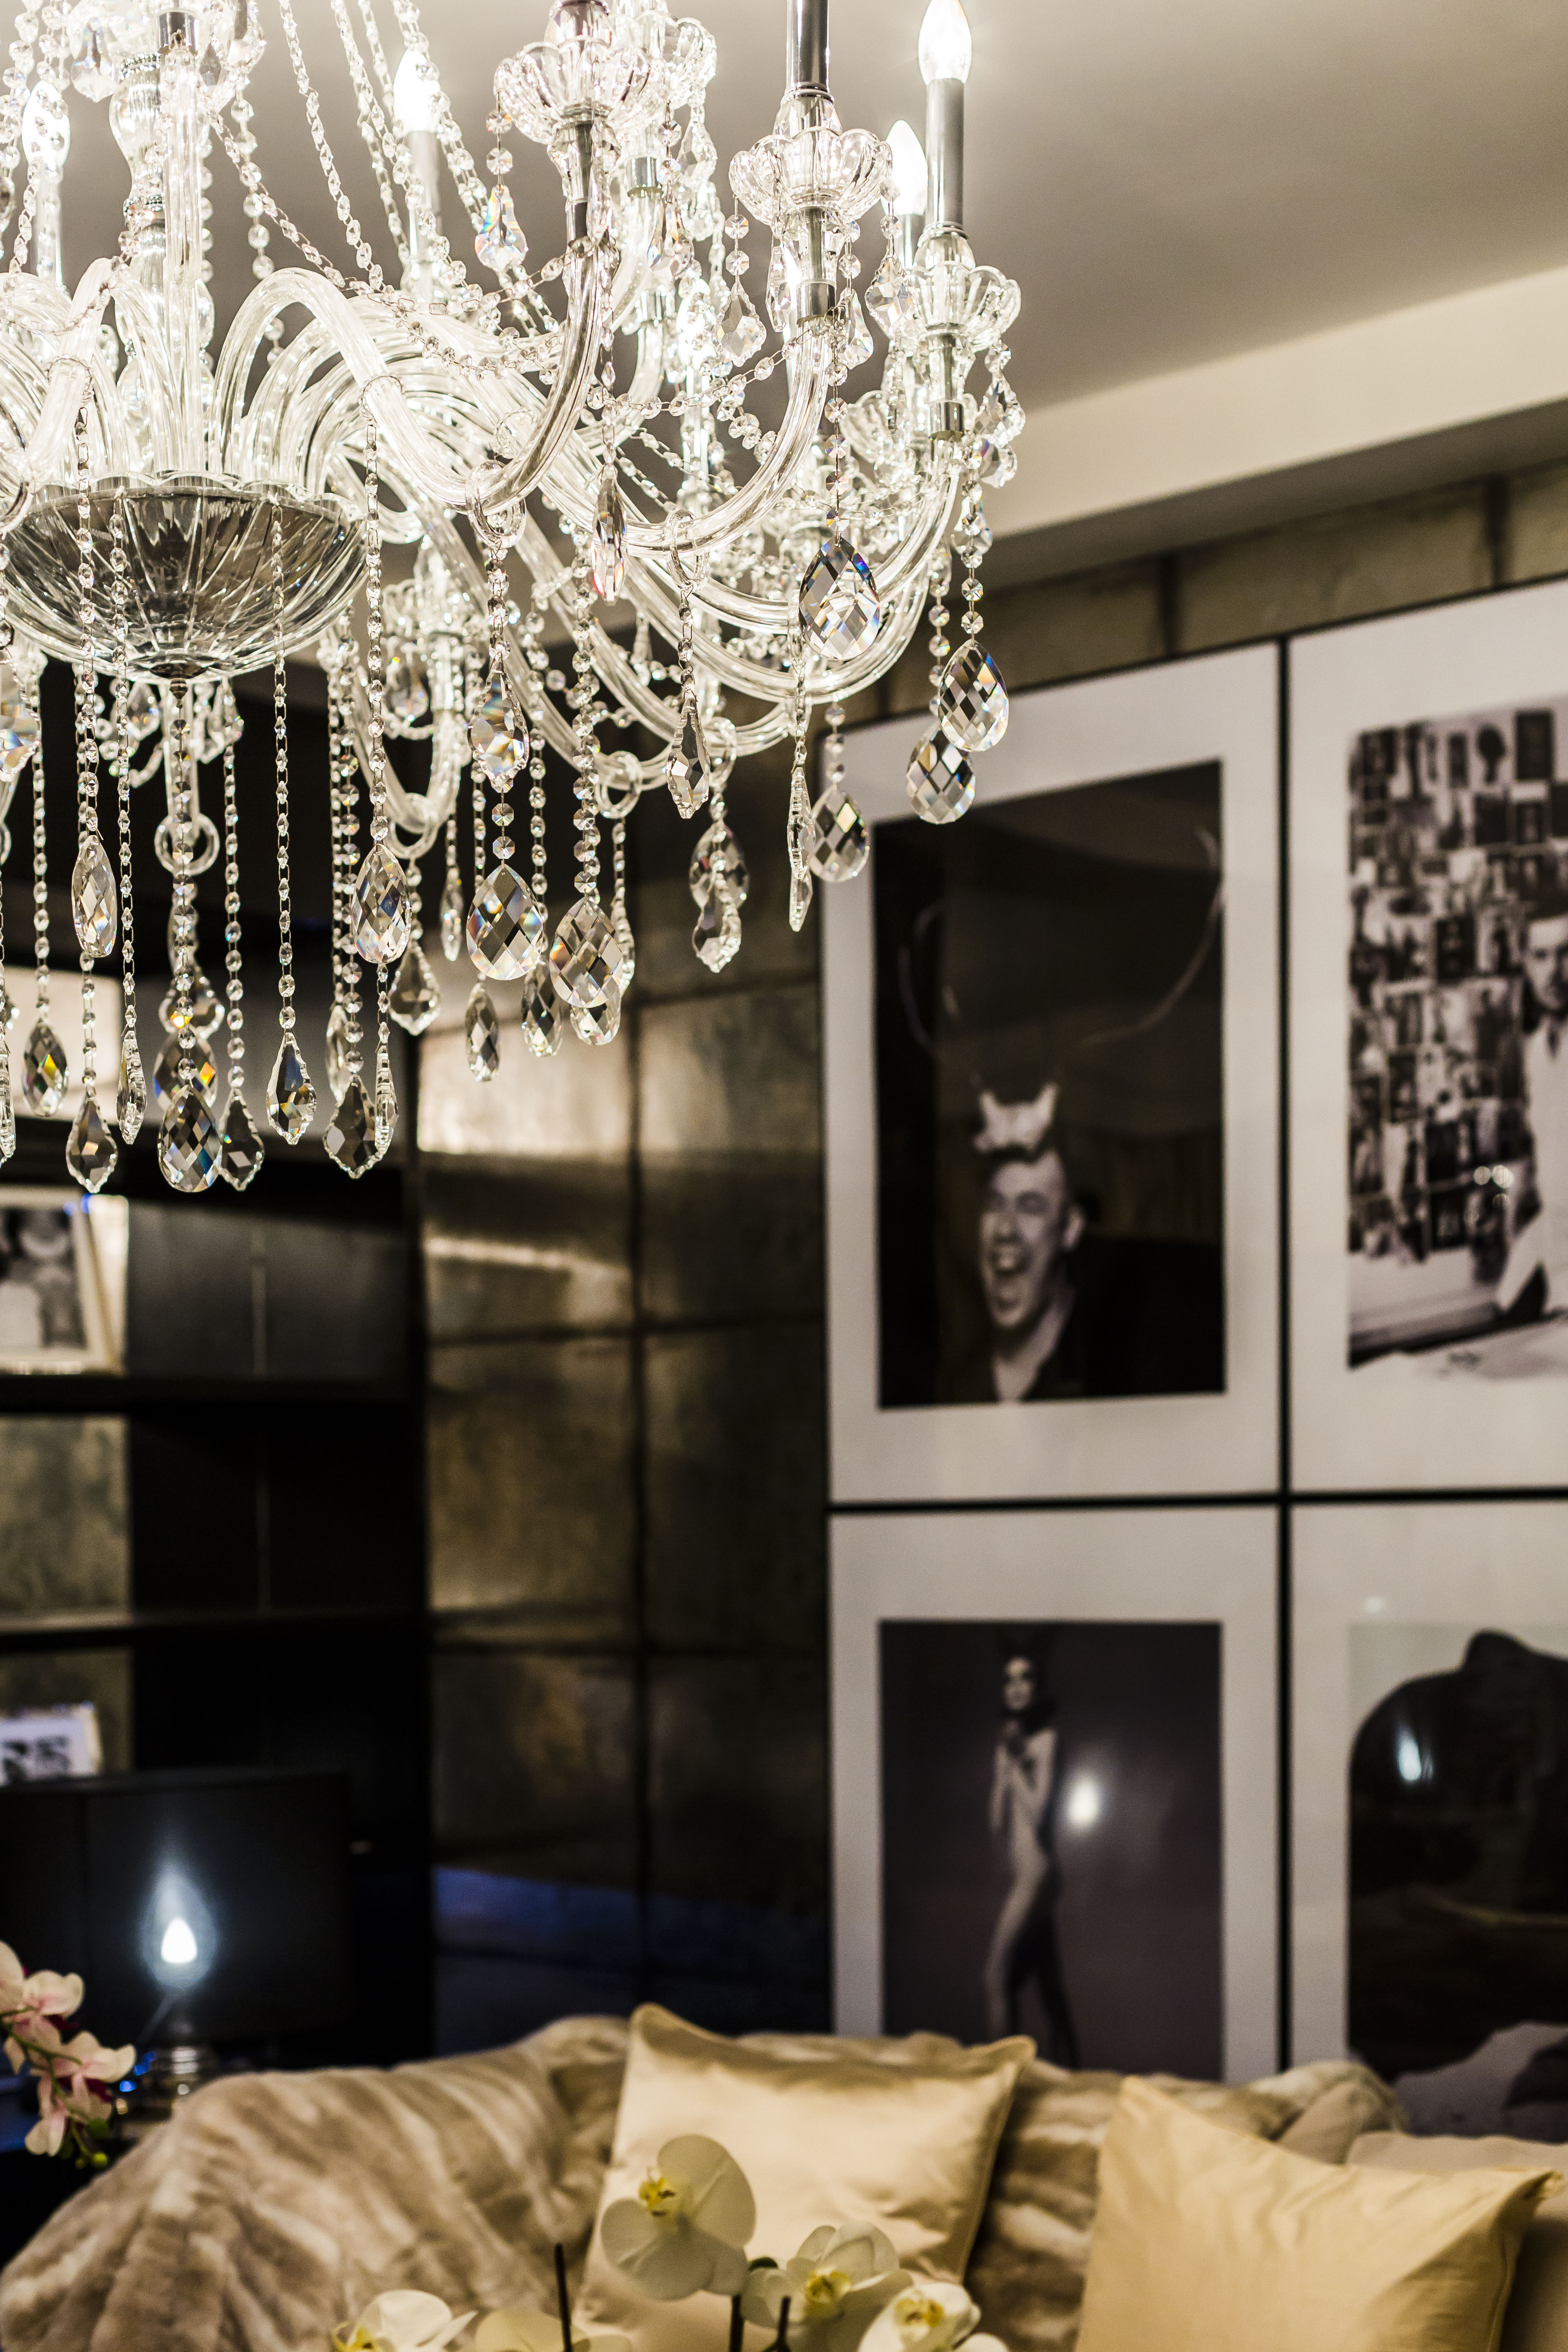 Fashion Legend Alexander McQueen's $10 Million London Home Hits